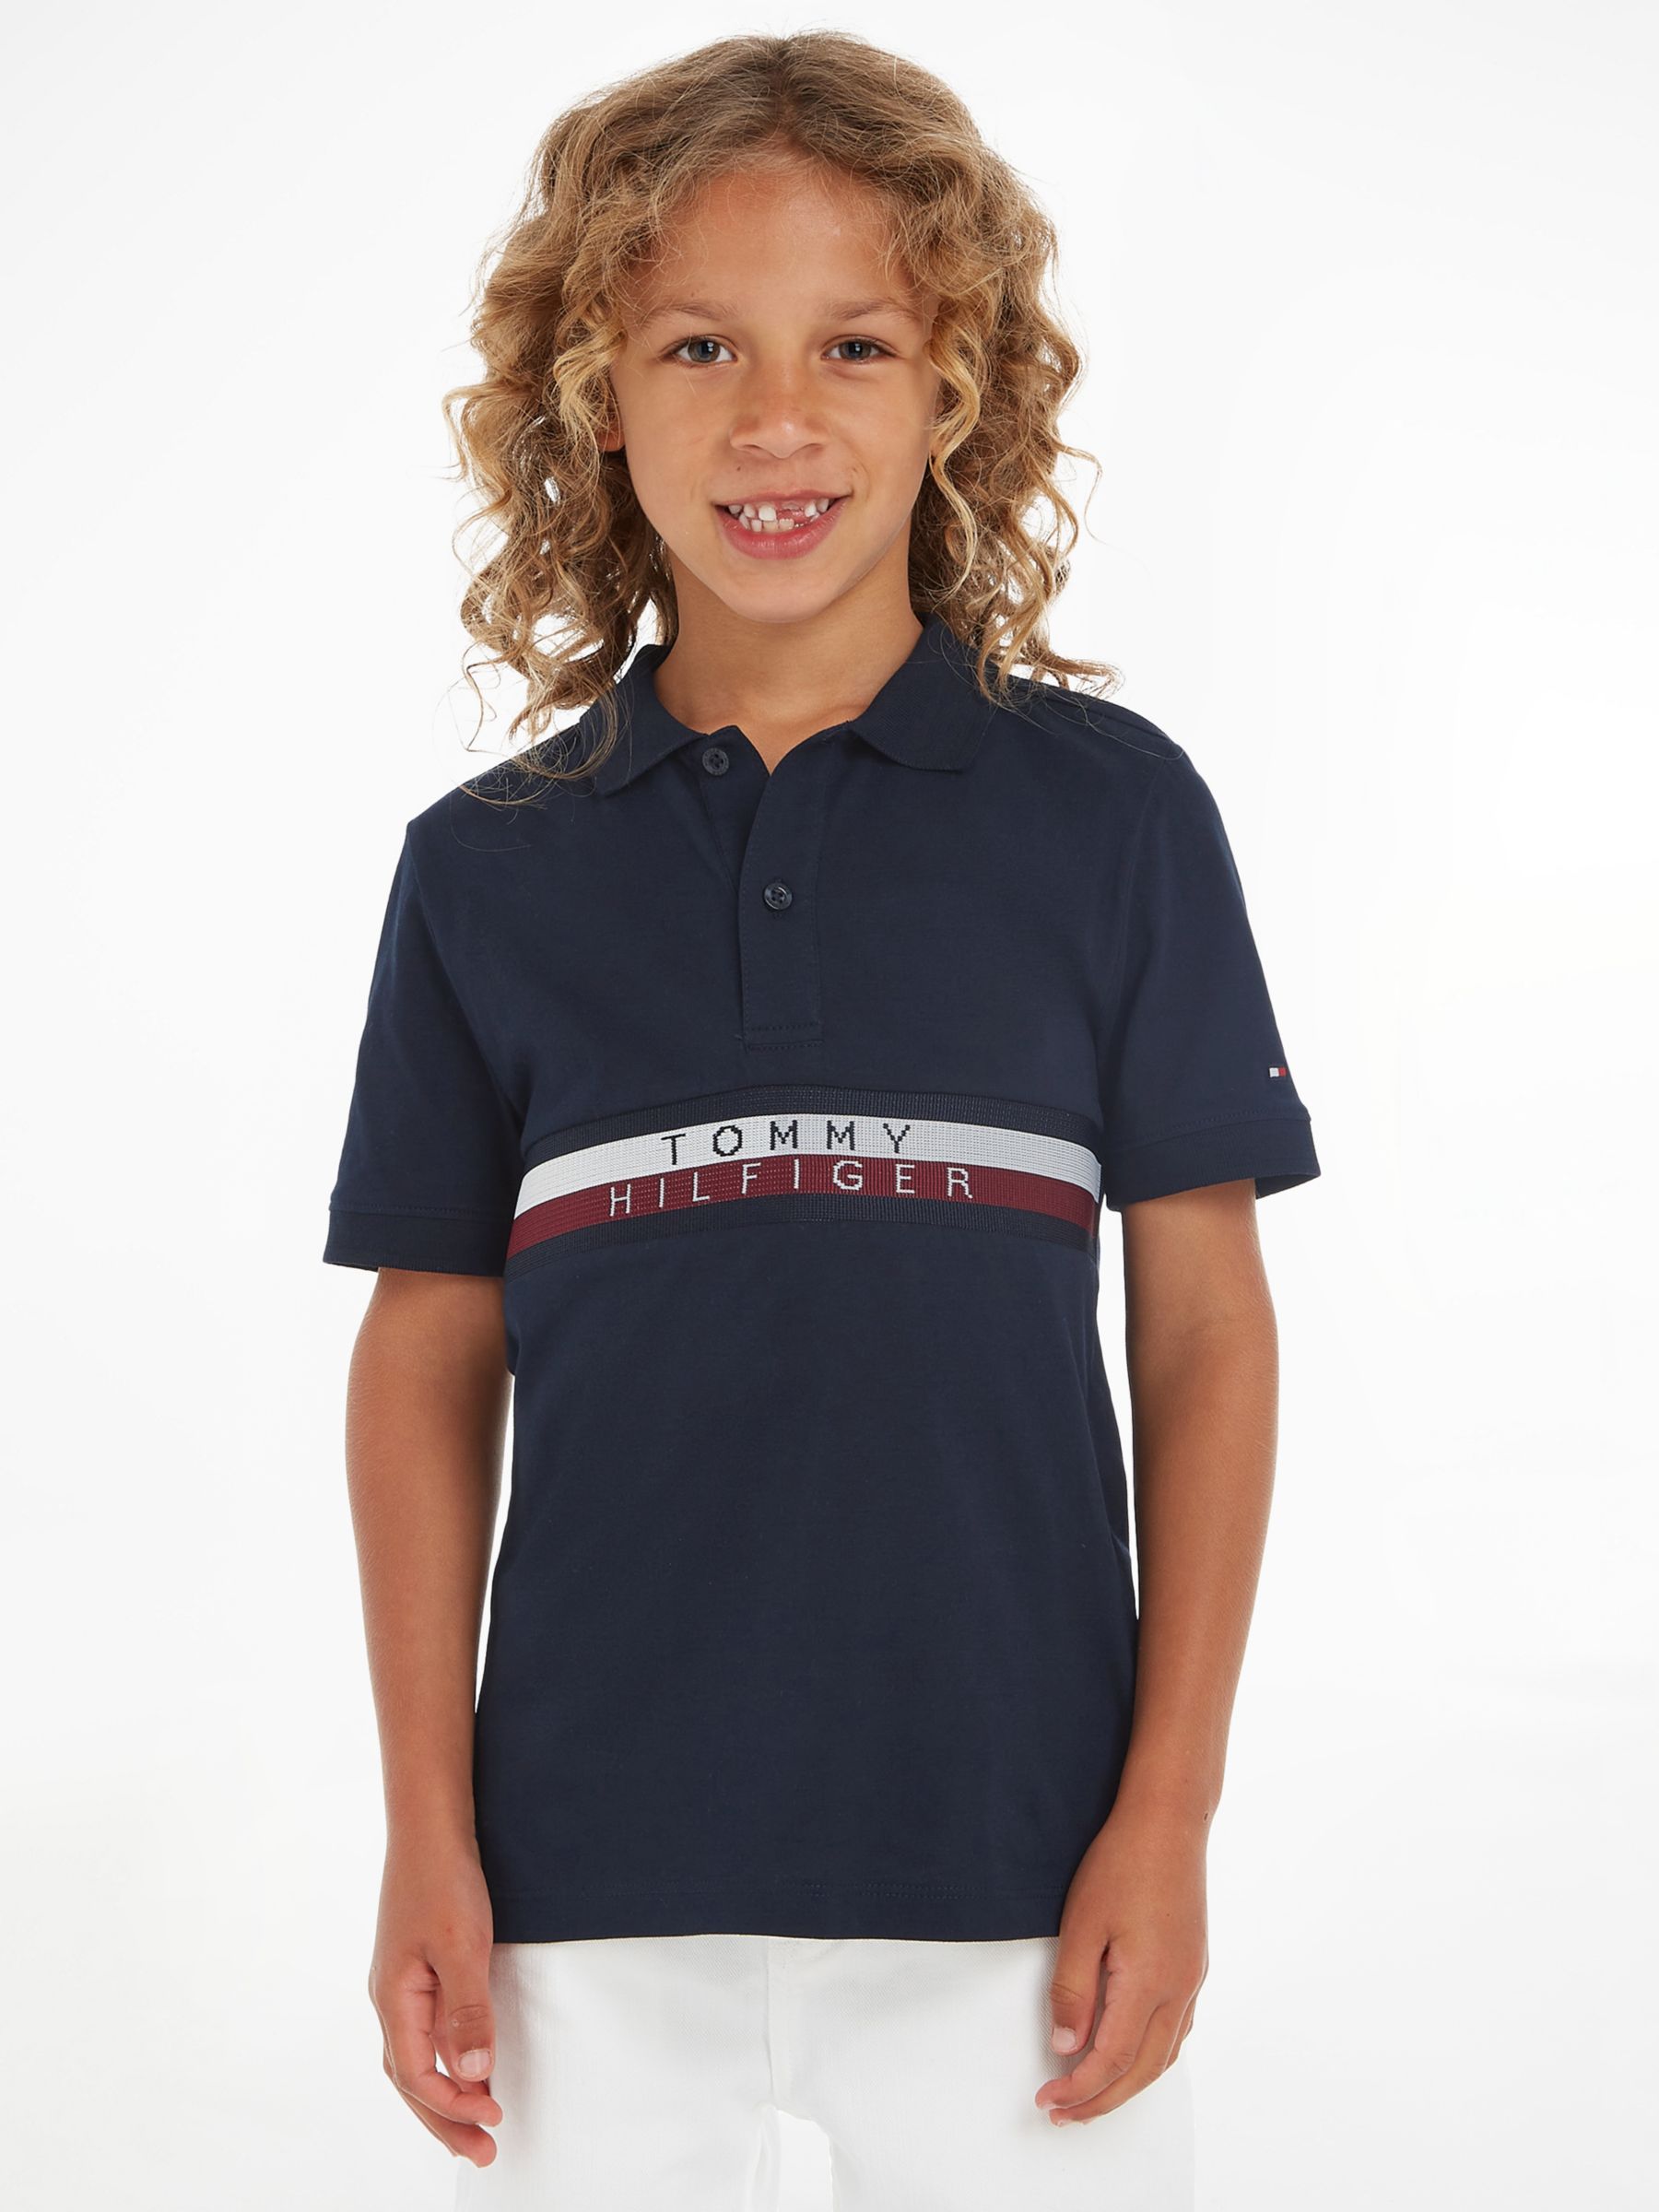 Tommy Hilfiger Kids' Stripe Logo Polo Shirt, Desert Sky, 6 years